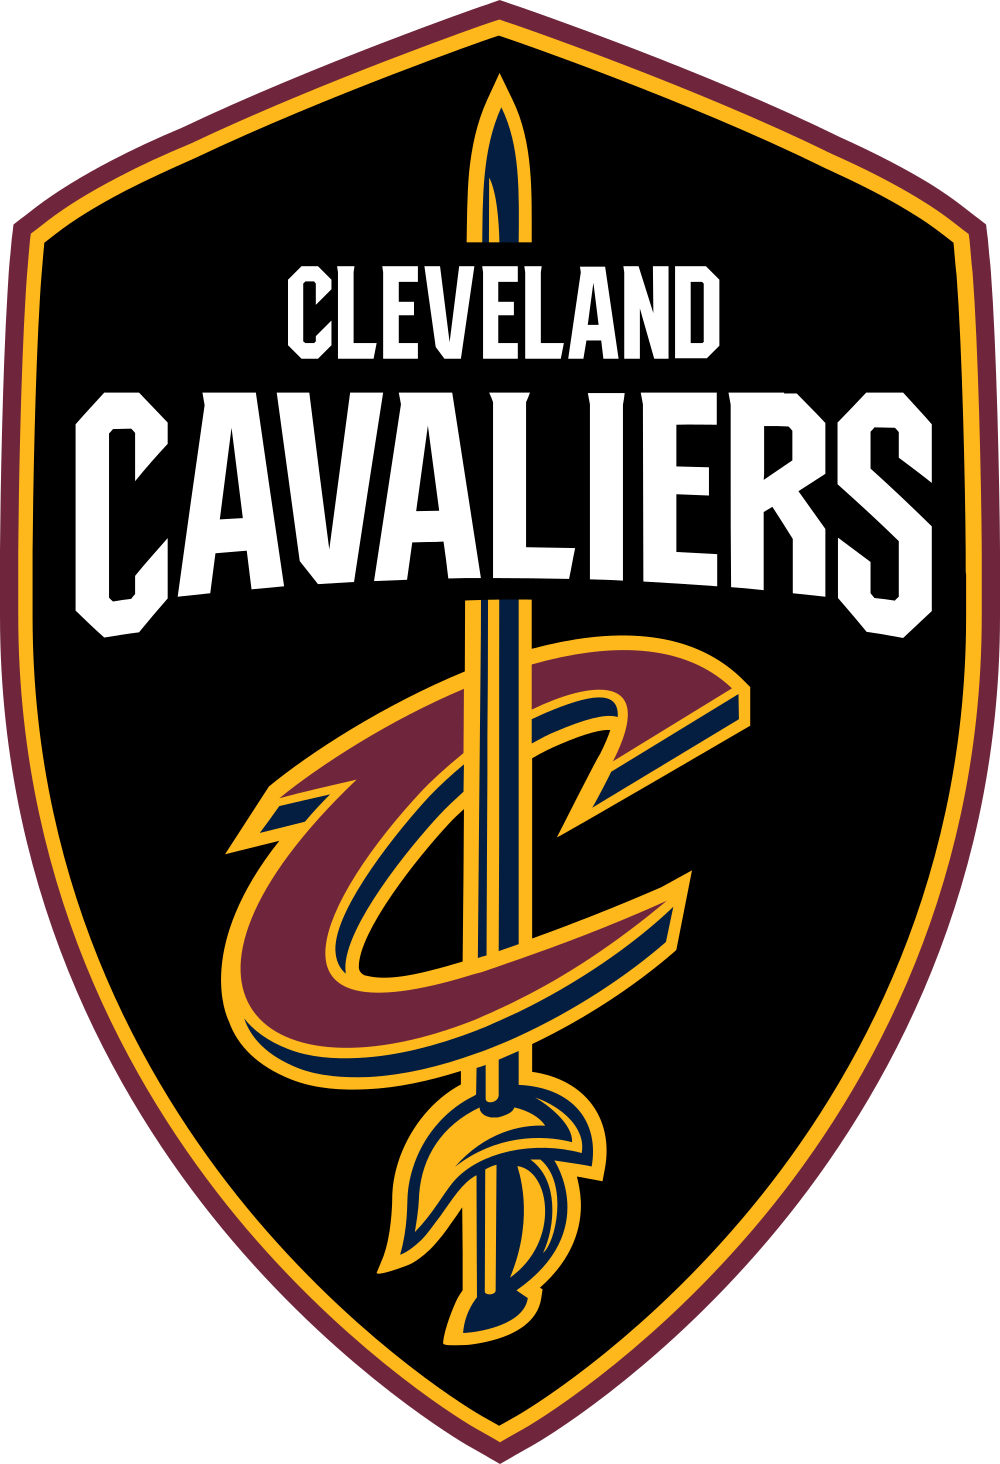 Cleveland Cavaliers logo png transparent